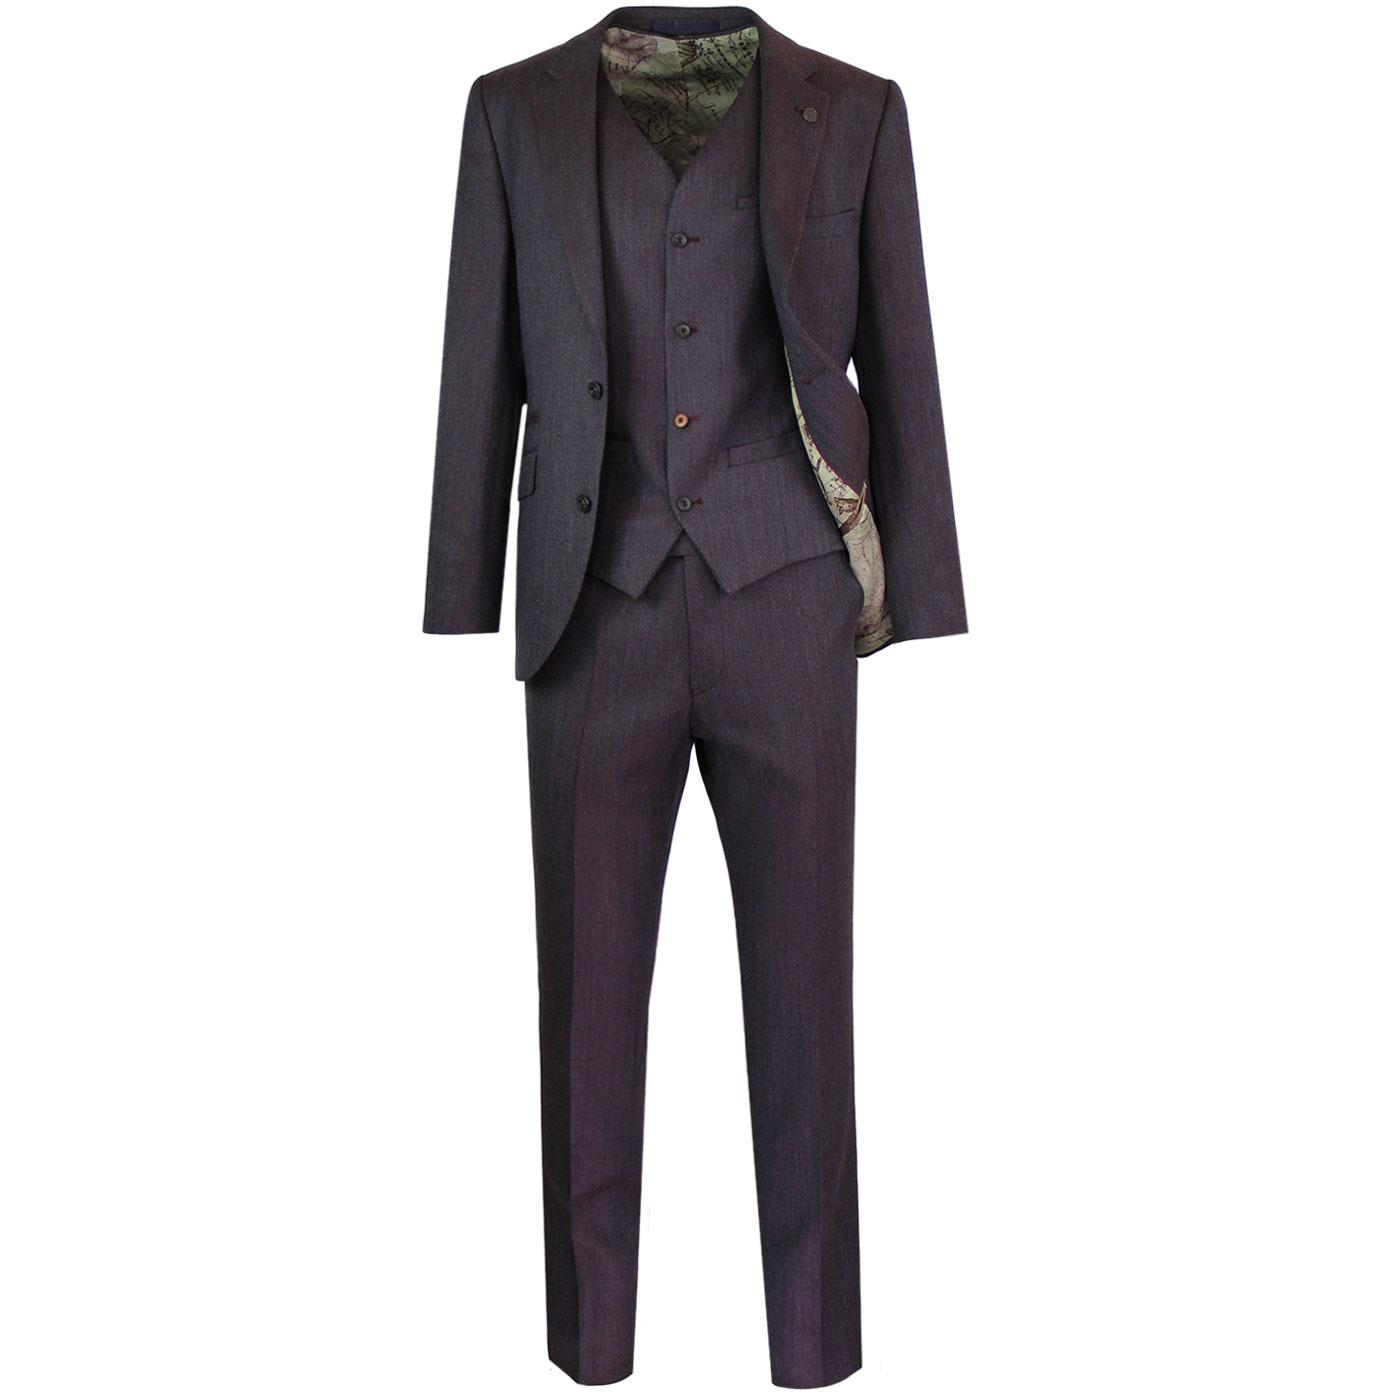 Towergate GIBSON LONDON Herringbone Tonic Mod Suit